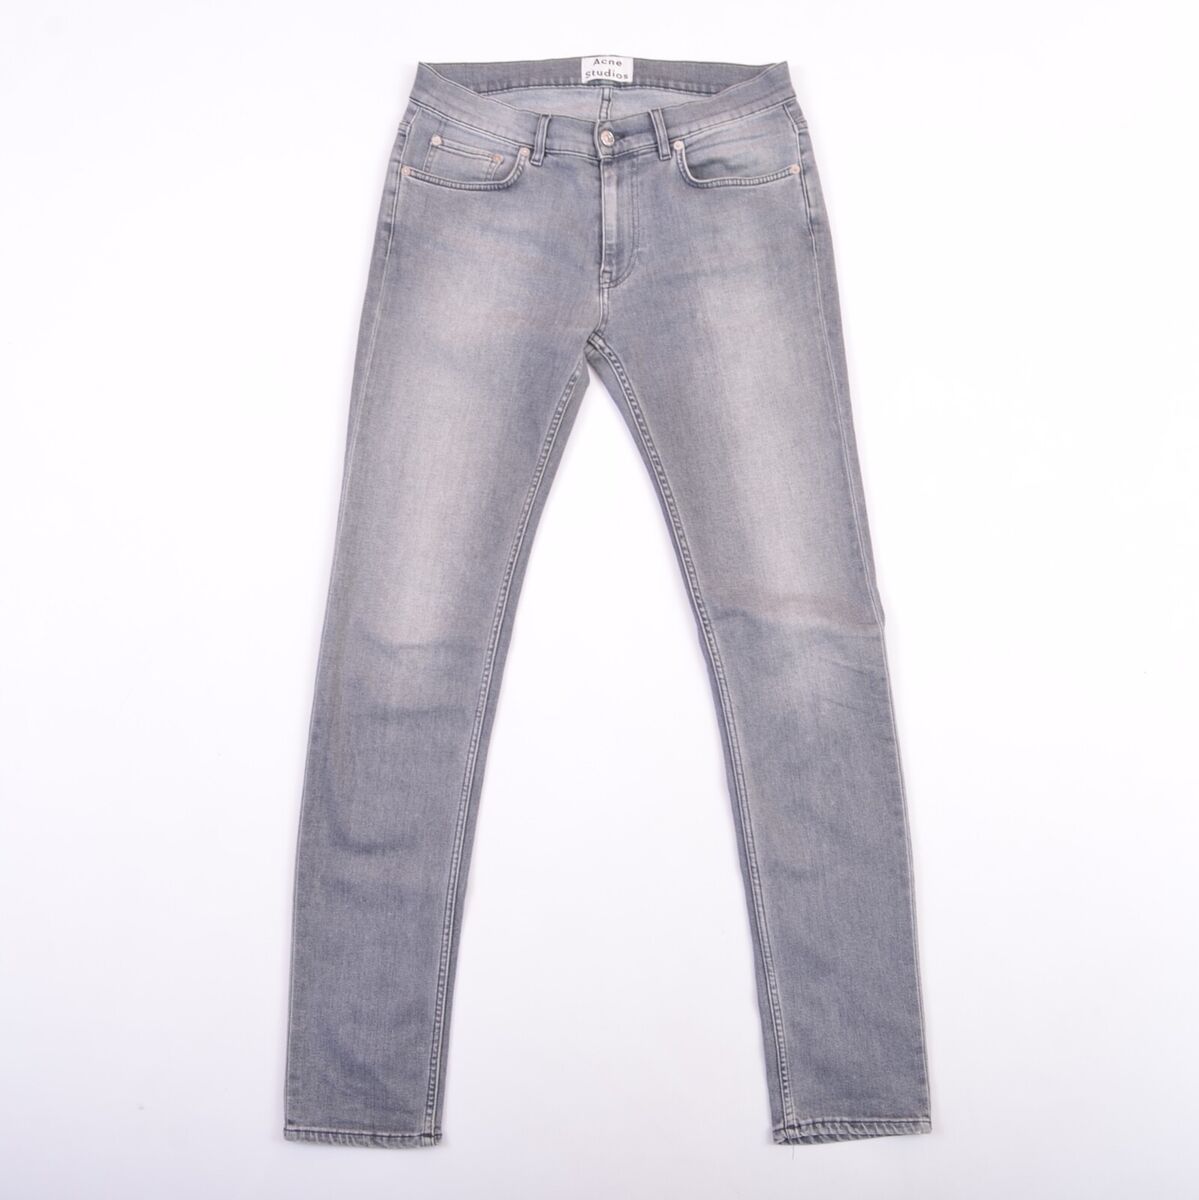 parfume depositum Omkreds Acne Studios Ace Light Grey Slim Stretch Jeans Mens sz W31 L32 / 31x32 |  eBay